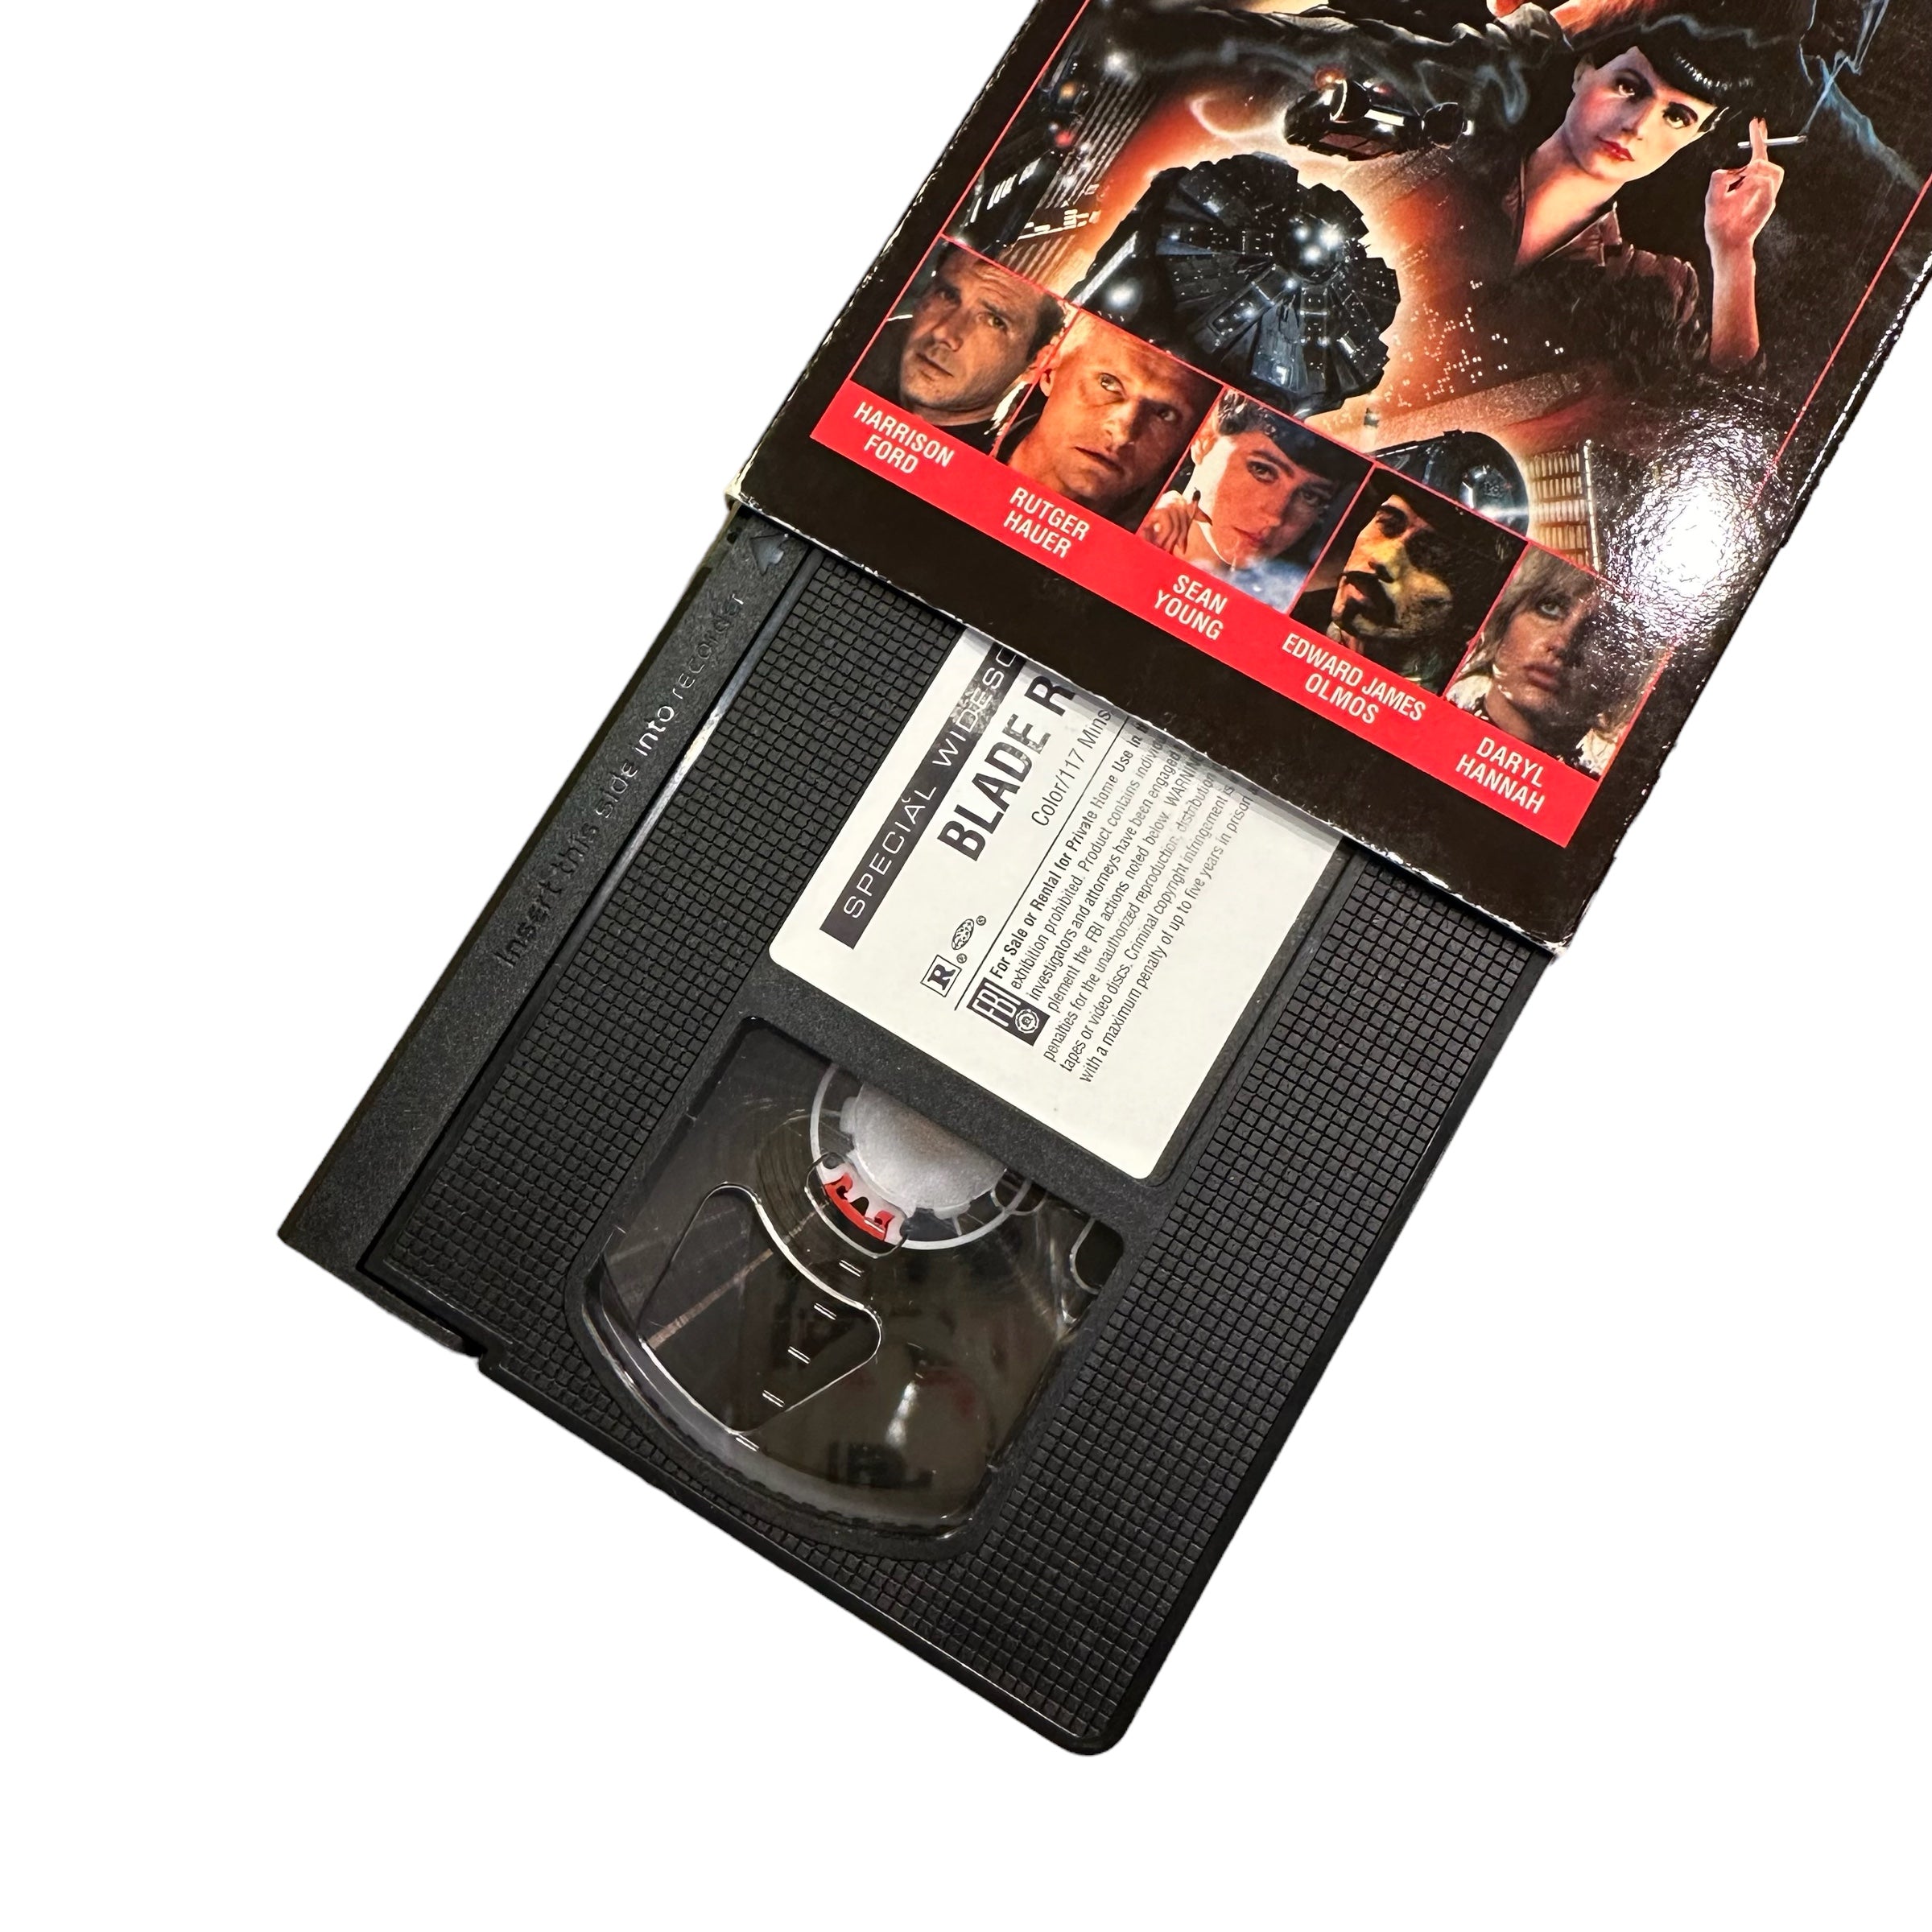 VHS ビデオテープ 輸入版 ブレード・ランナー Blade Runner 海外版 USA アメリカ ヴィンテージ ビデオ 紙ジャケ